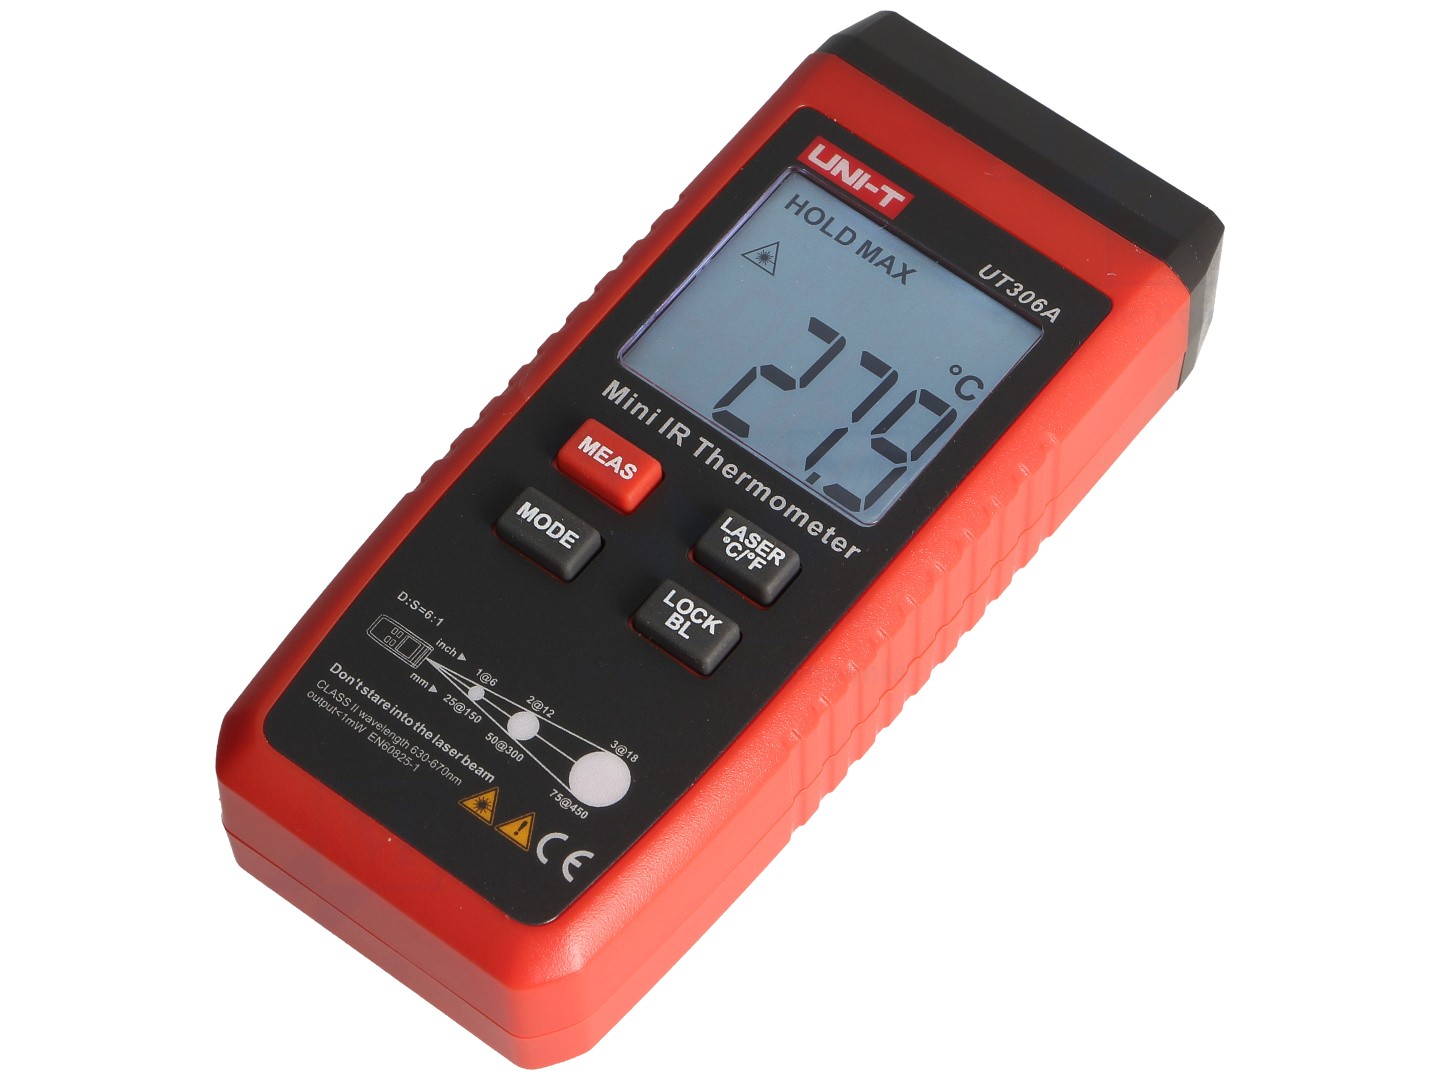 Termometru Infrarosu fara contact LCD iluminat -35÷300°C UT306A